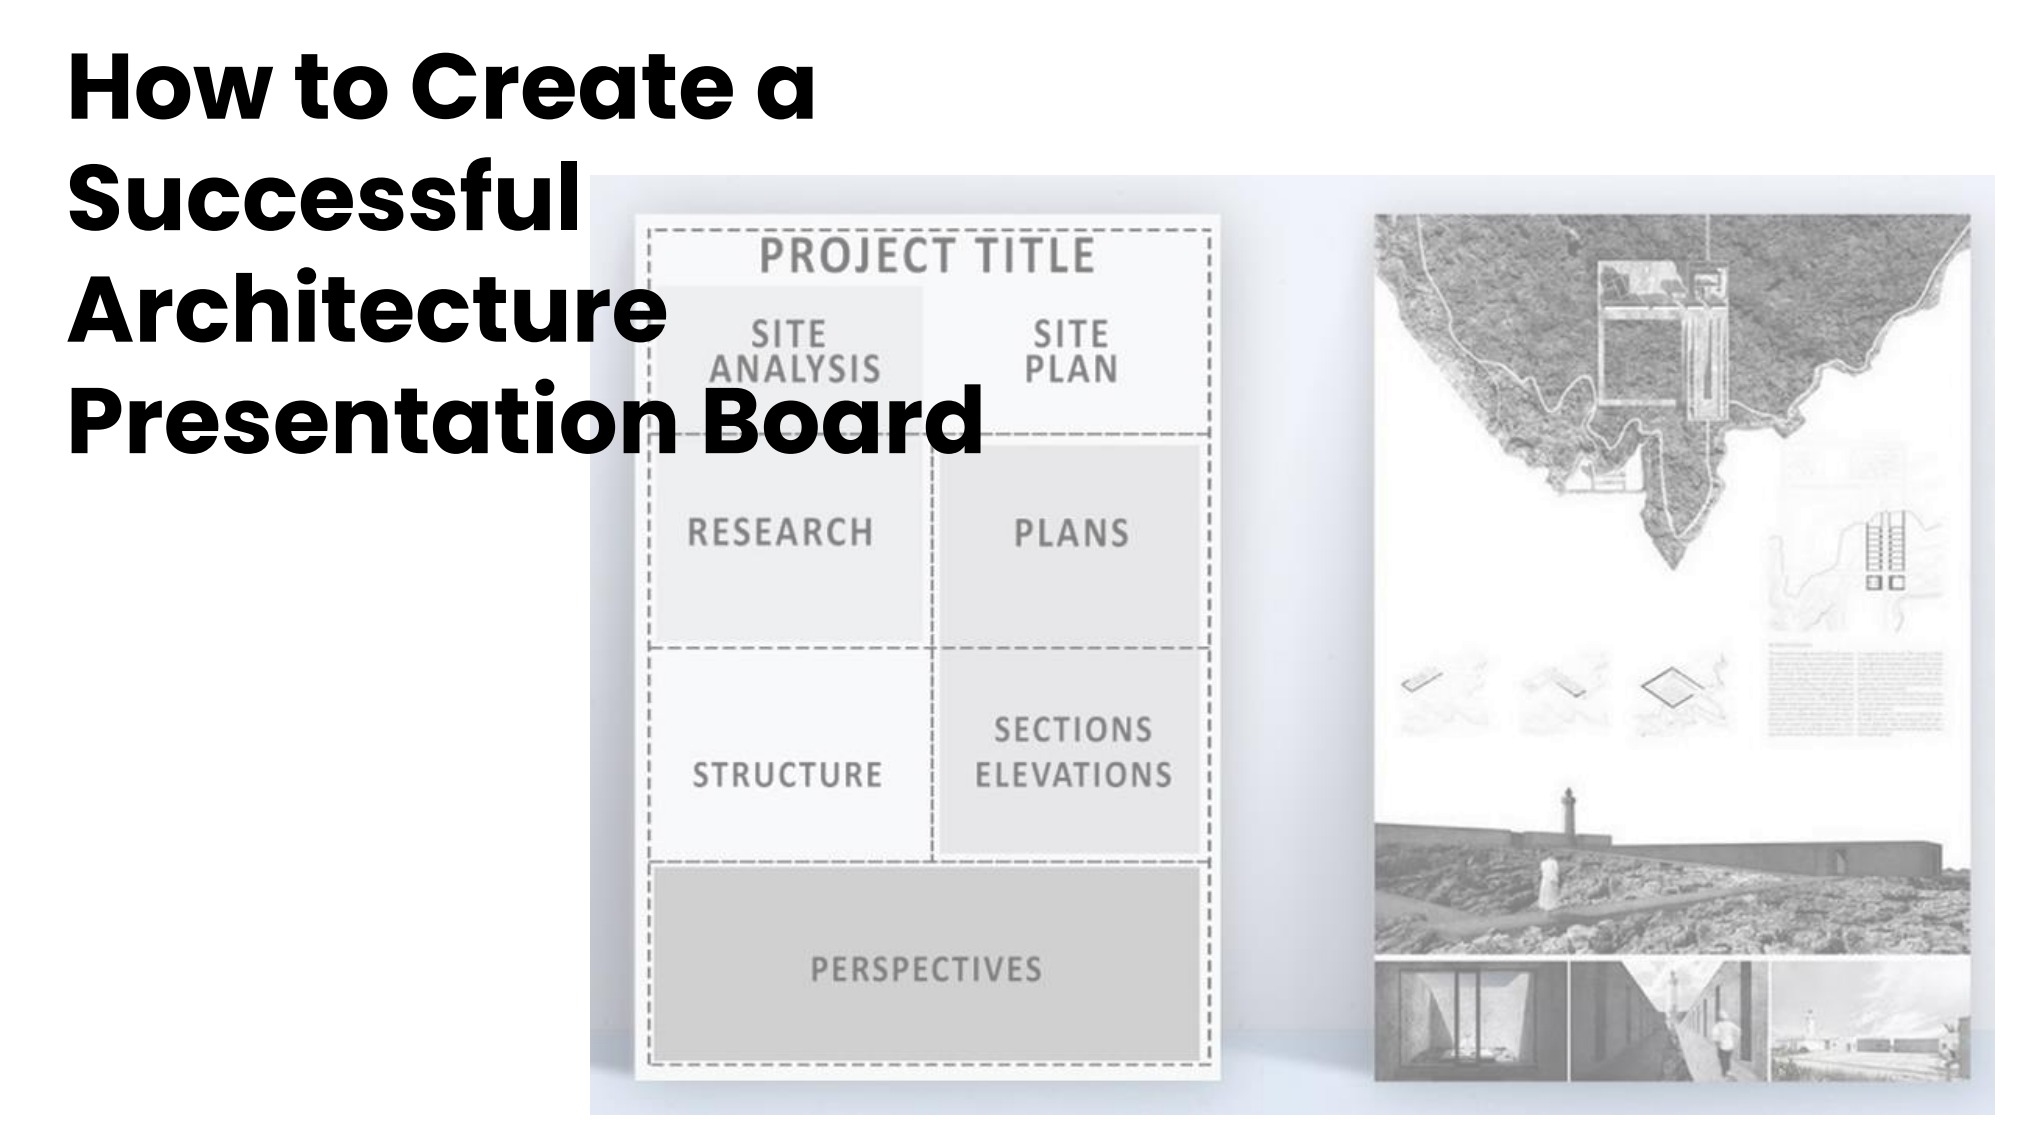 How to create a successful architecture pressentation board